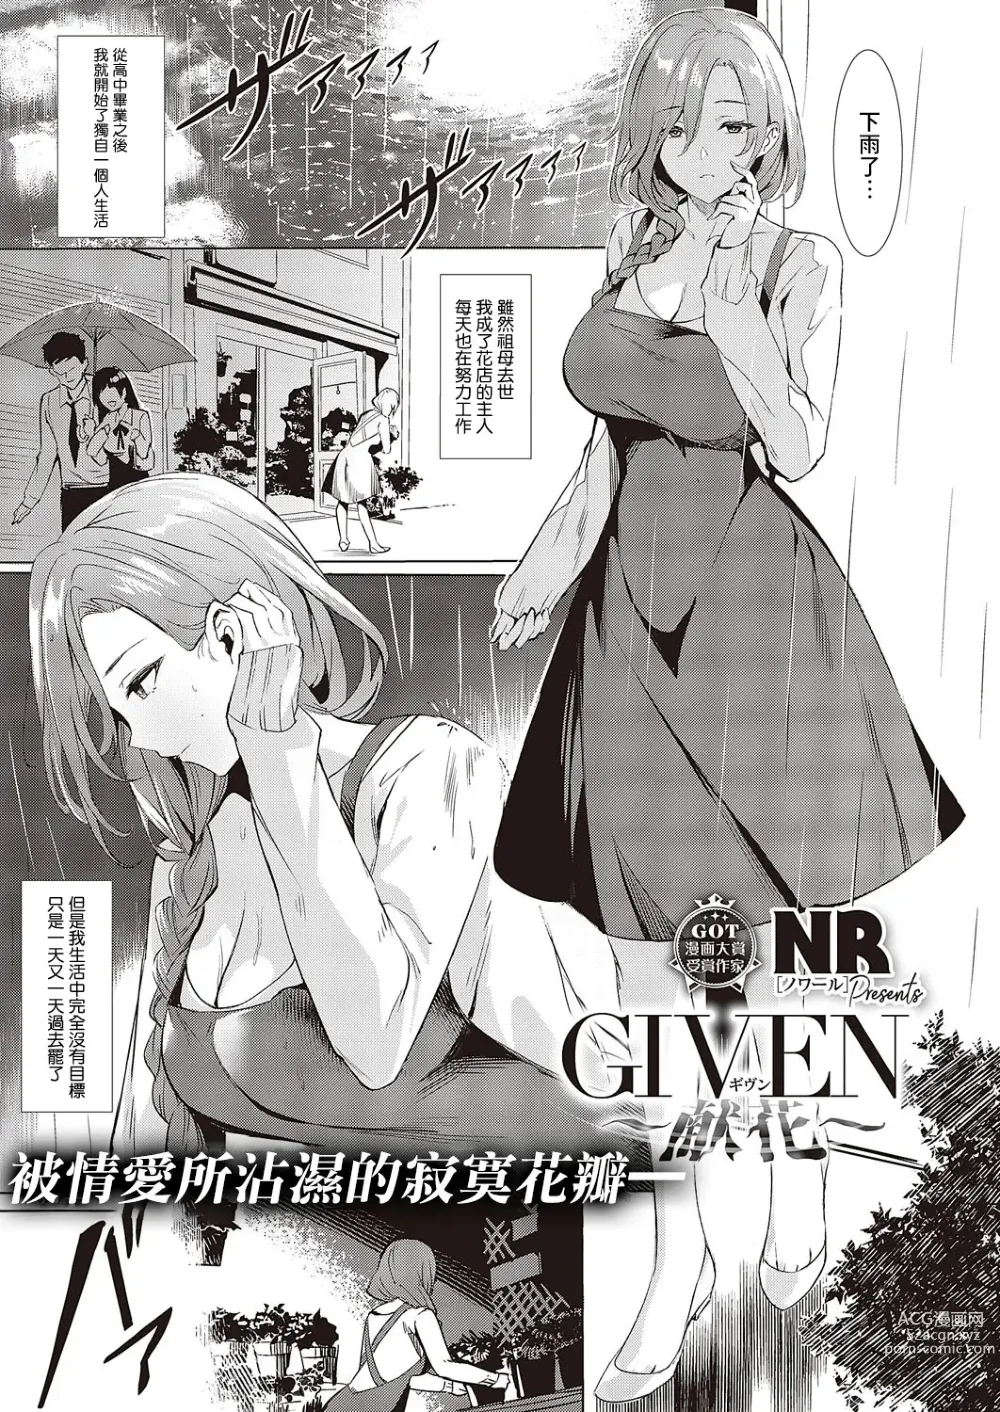 Page 1 of manga GIVEN ~Kenka~